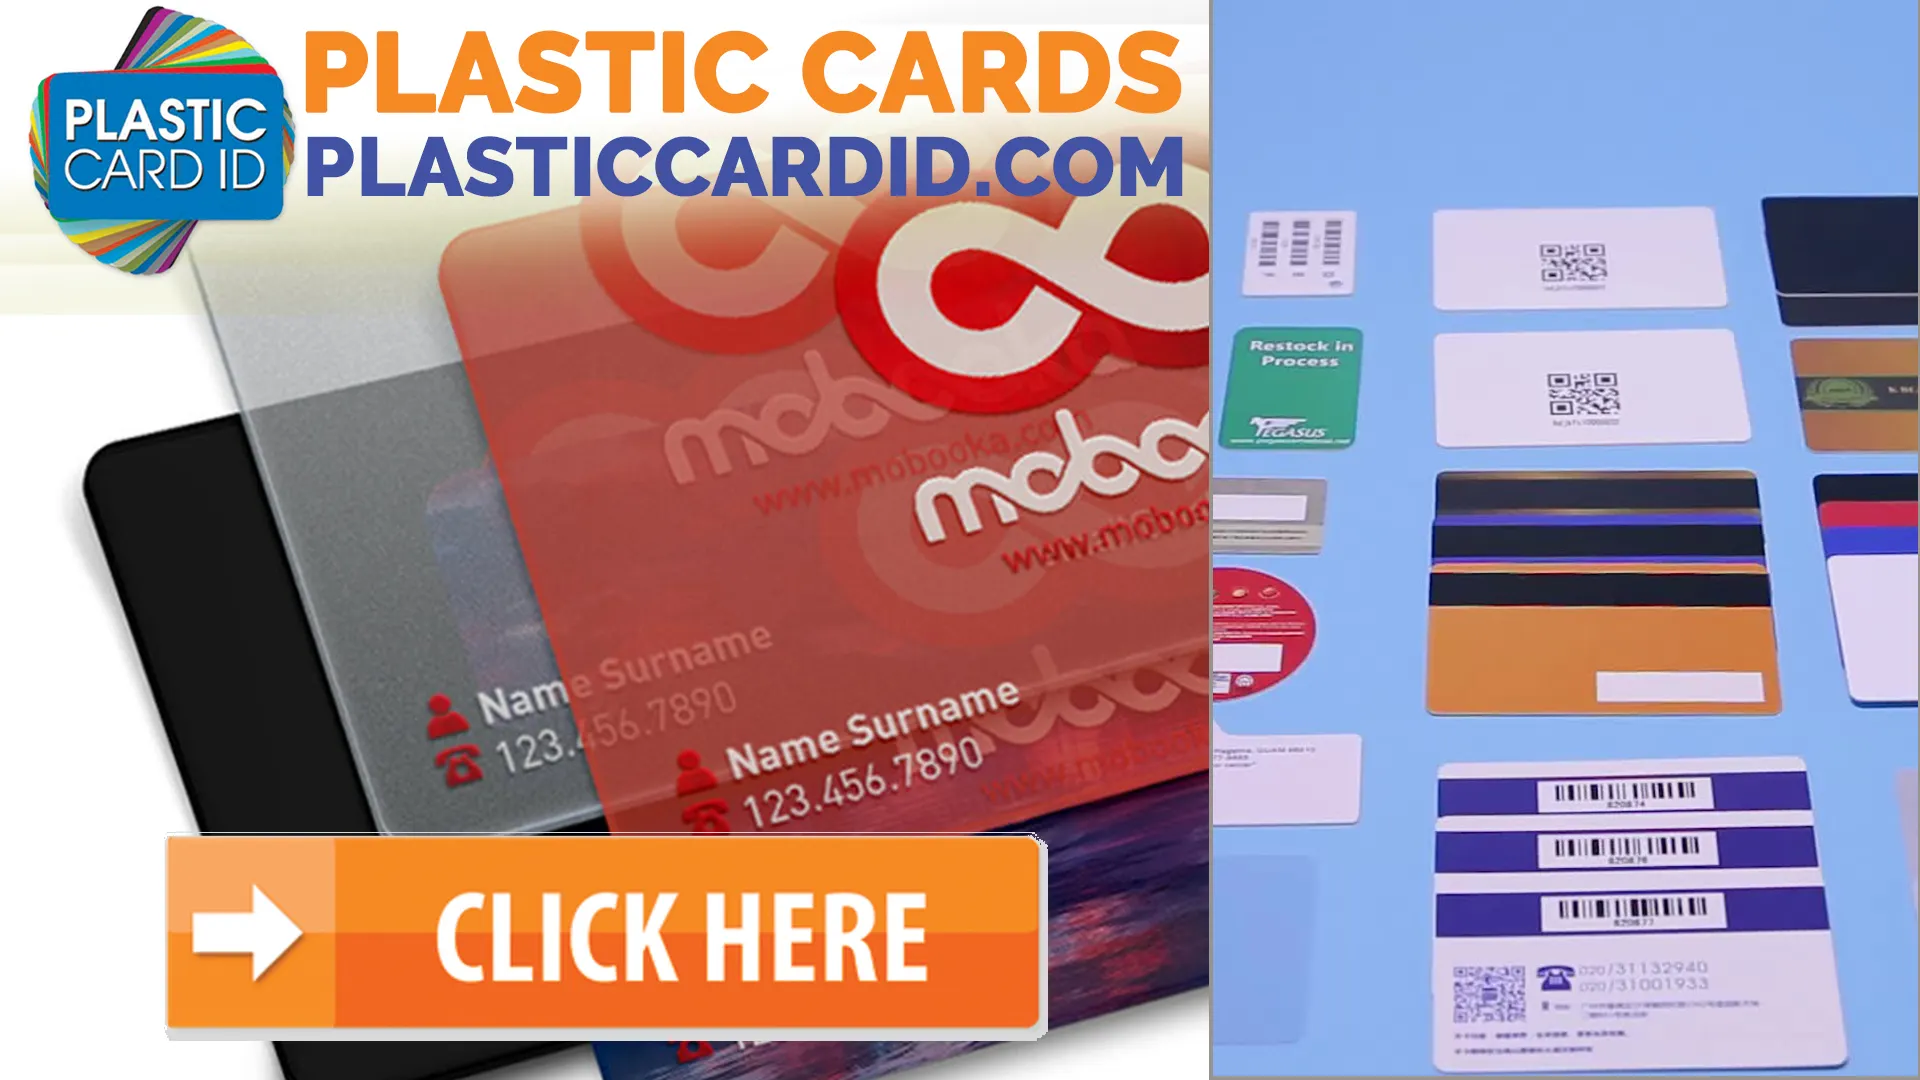 Comprehensive Range: Plastic Card Printers and Accessories